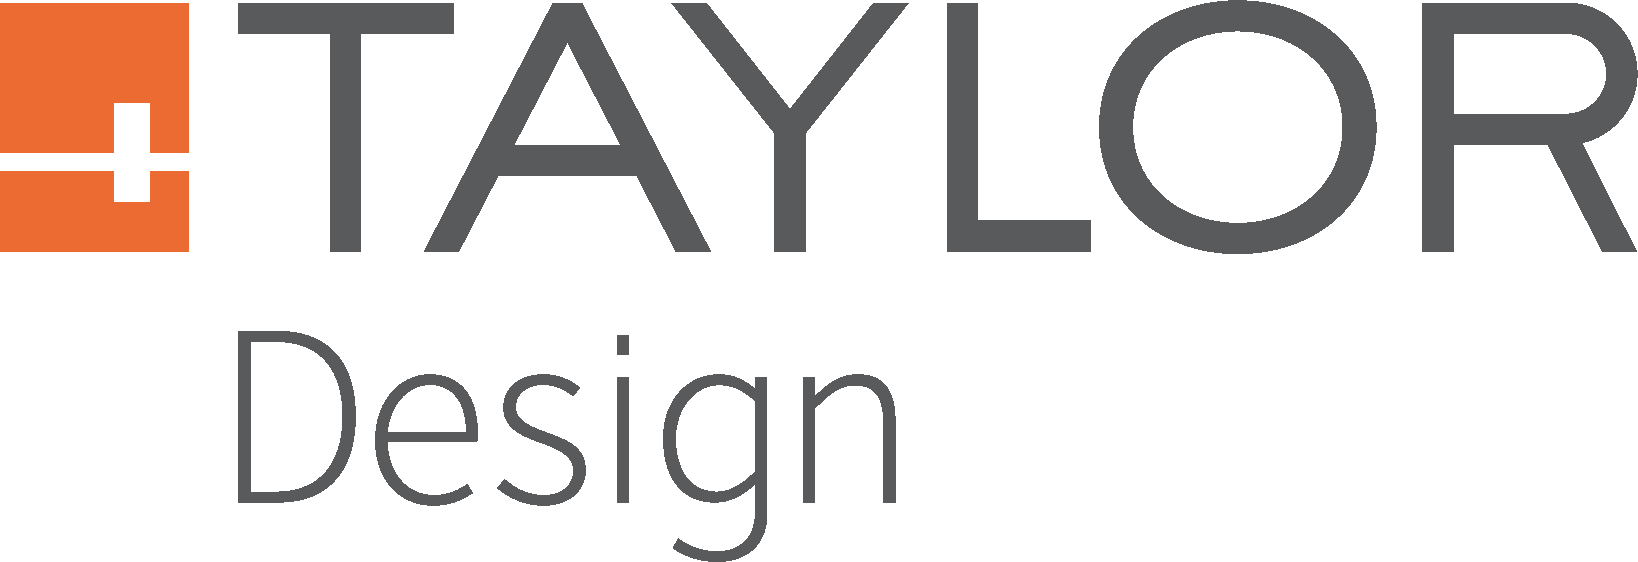 Google Taylor Logo - Taylor Design - Architecture, Interior Design, Design Strategy